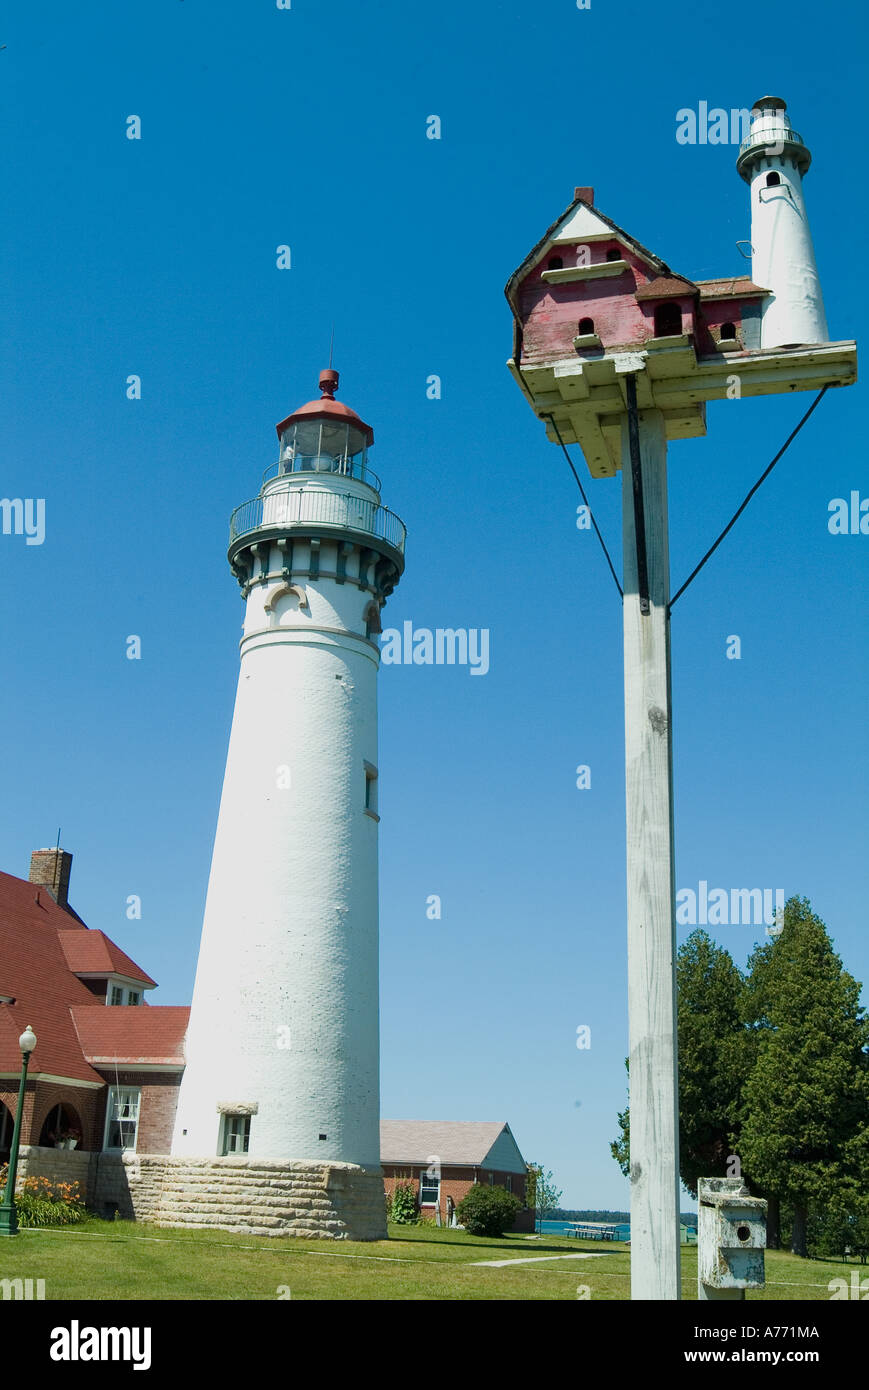 Seul Choix Leuchtturm, Michigan, USA Stockfoto